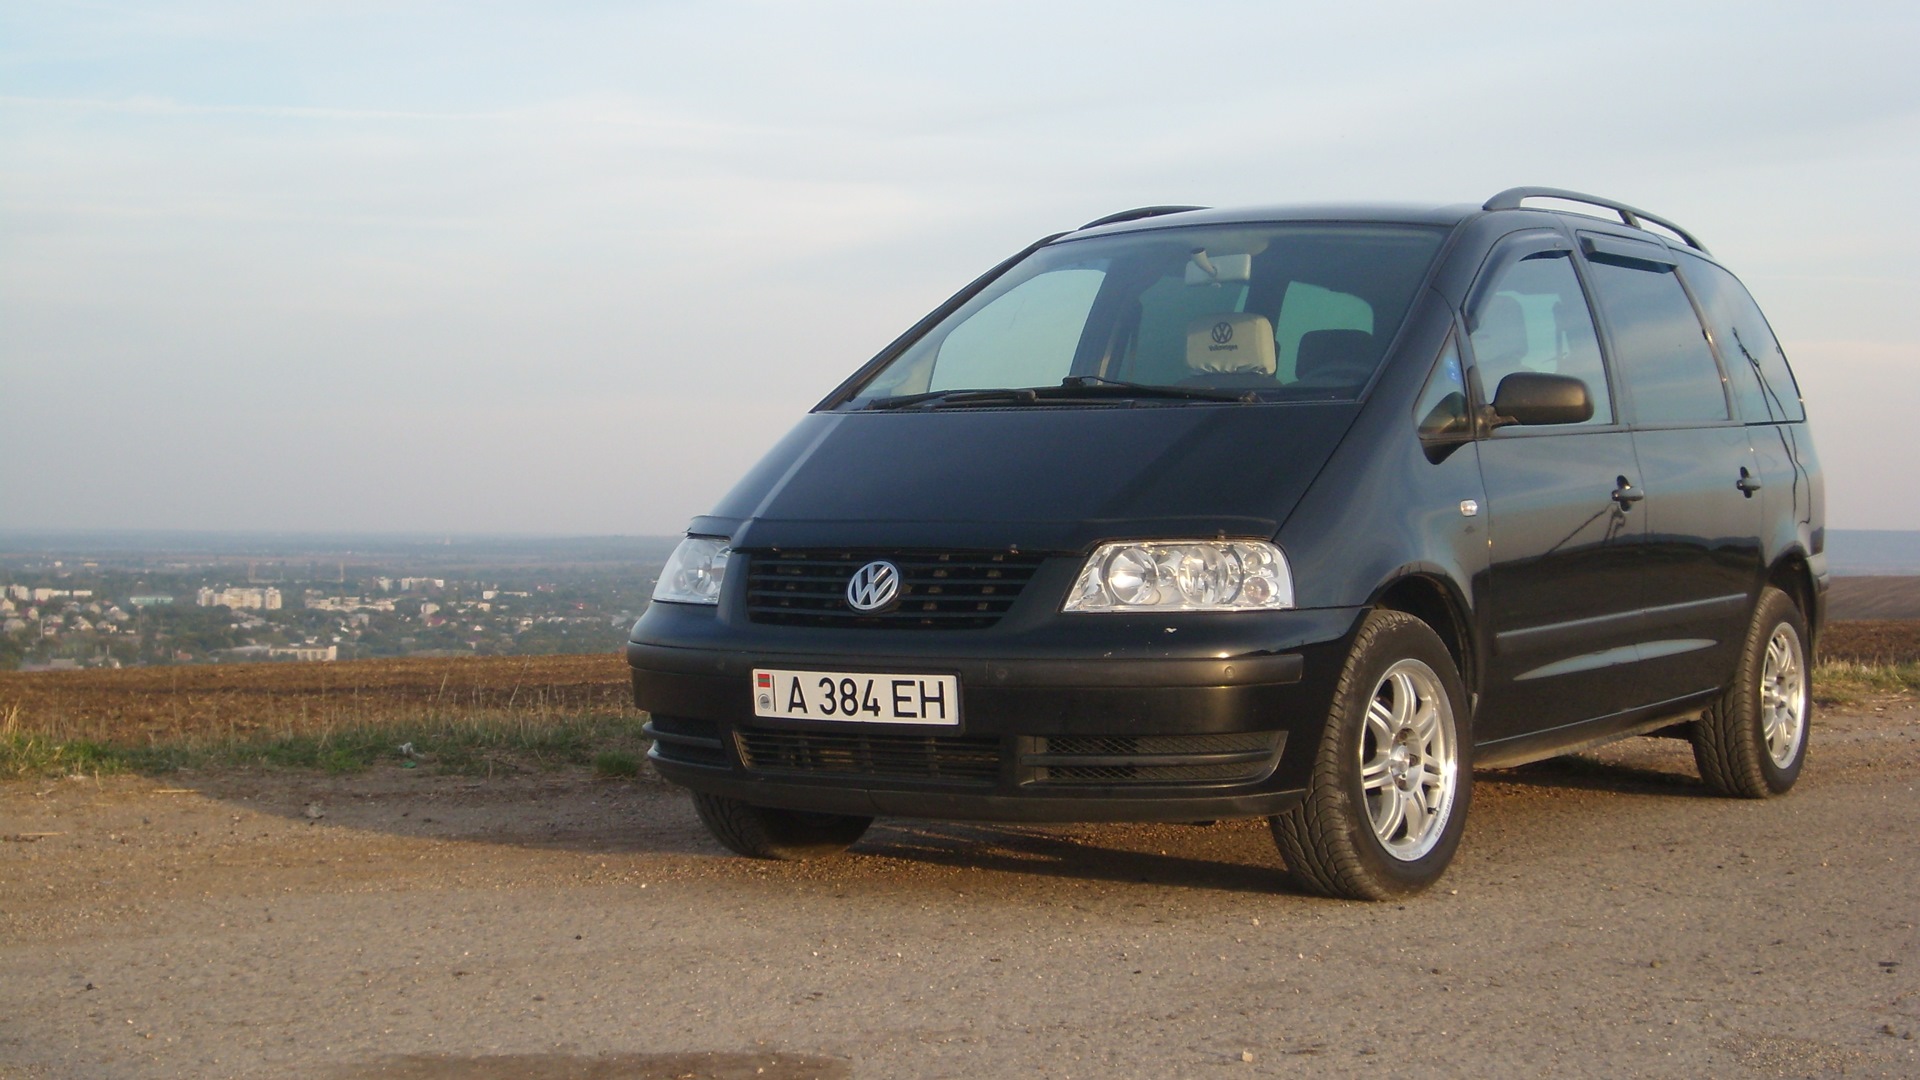 Volkswagen sharan 2001. VW Sharan 1.9 TDI 1999. VW Sharan 1.9 TDI 1997 Tuning. Фольксваген Шаран 2005 1.9 тди. VW Sharan 1.9 TDI 1998 С черными дисками.